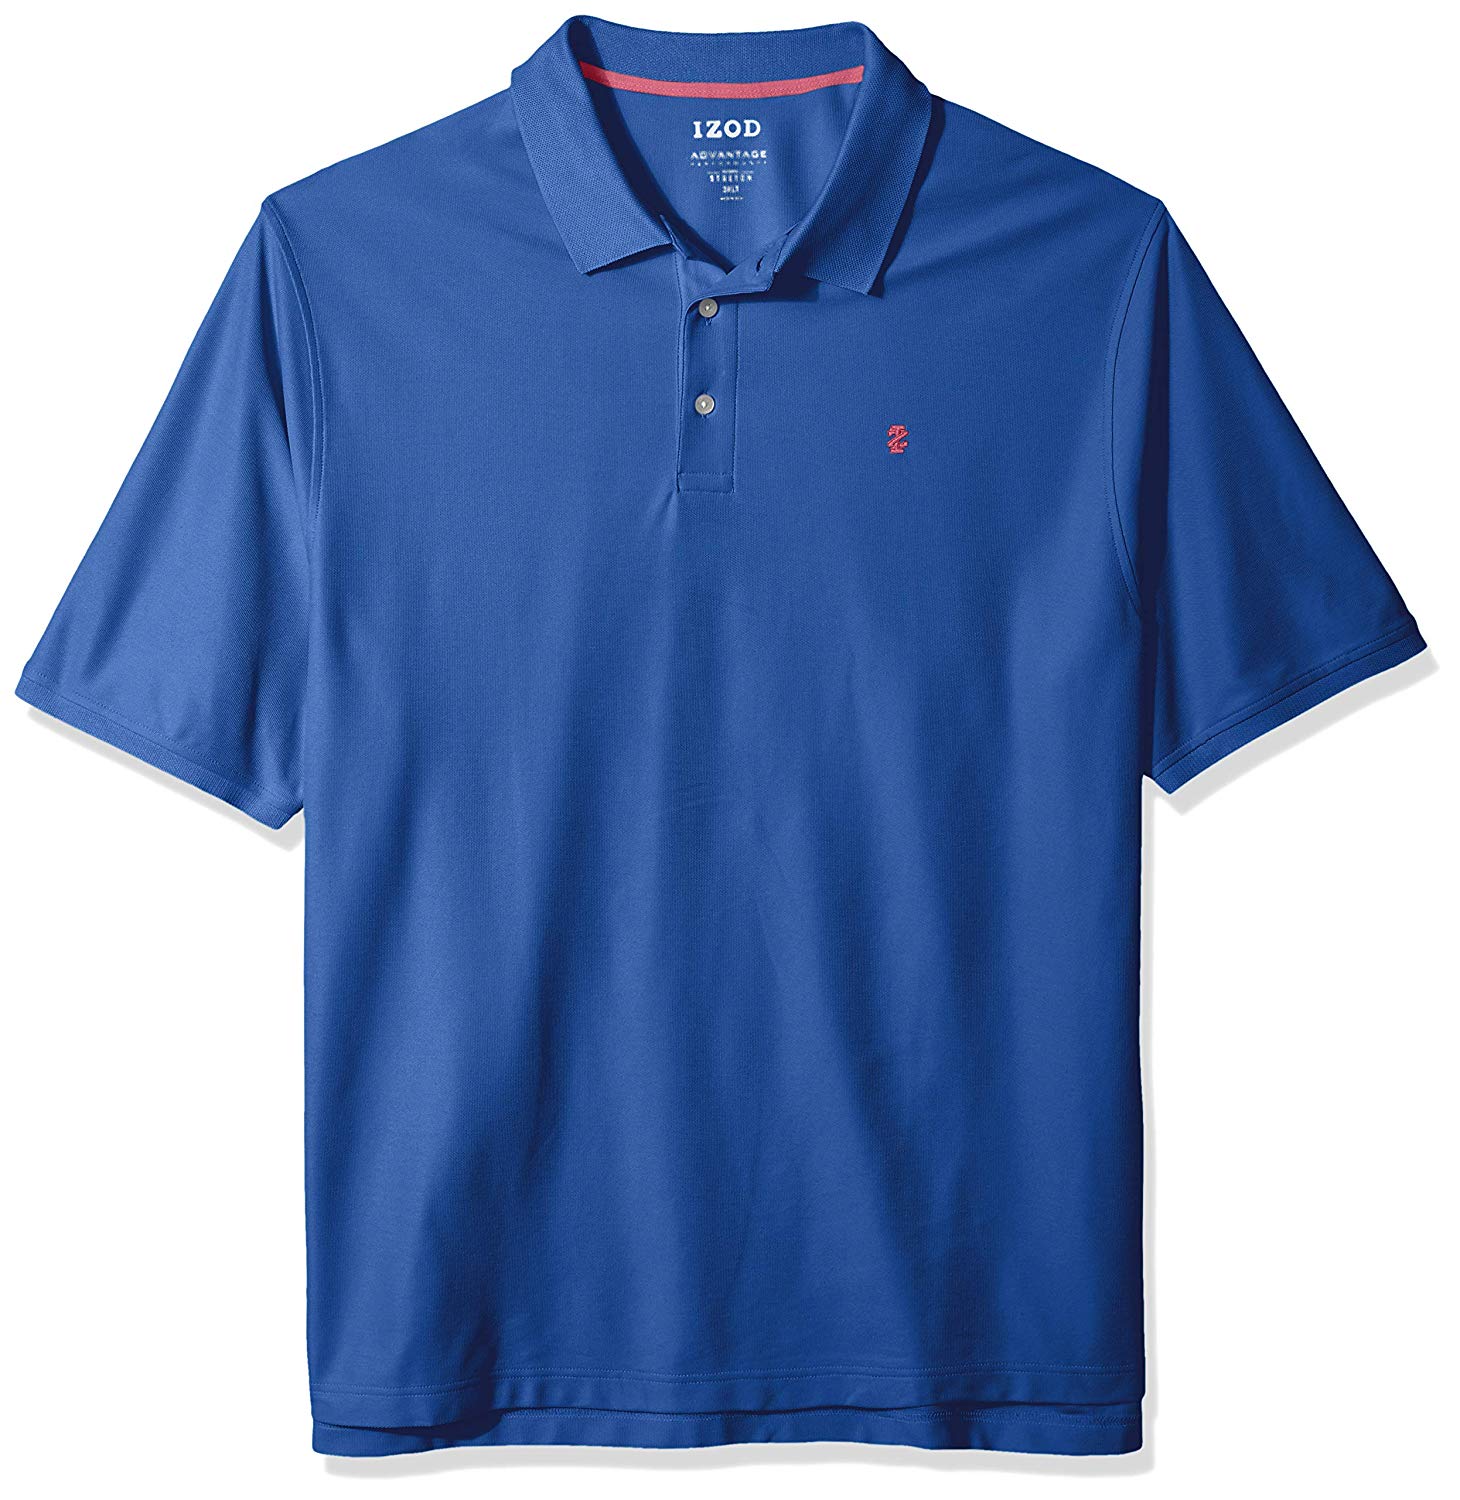 Izod Shirt Logo - IZOD Men's Big and Tall Advantage Performance Solid Polo Shirt at ...